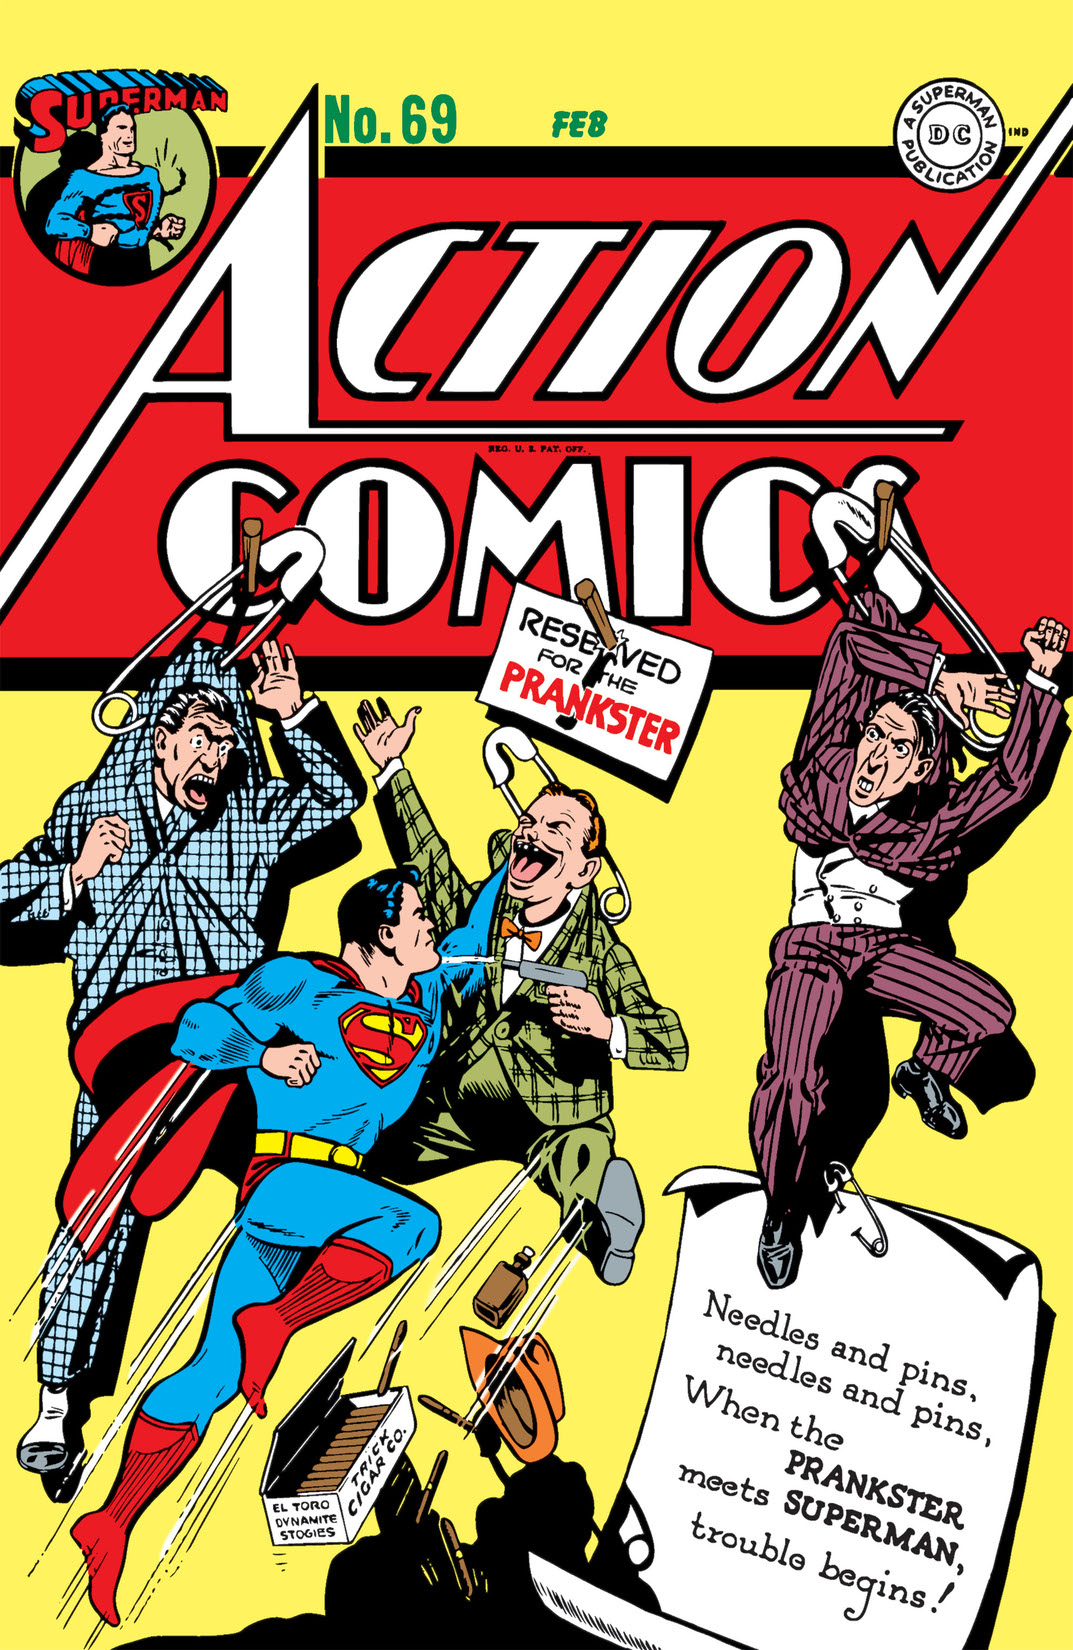 Action Comics (1938-) #69 preview images